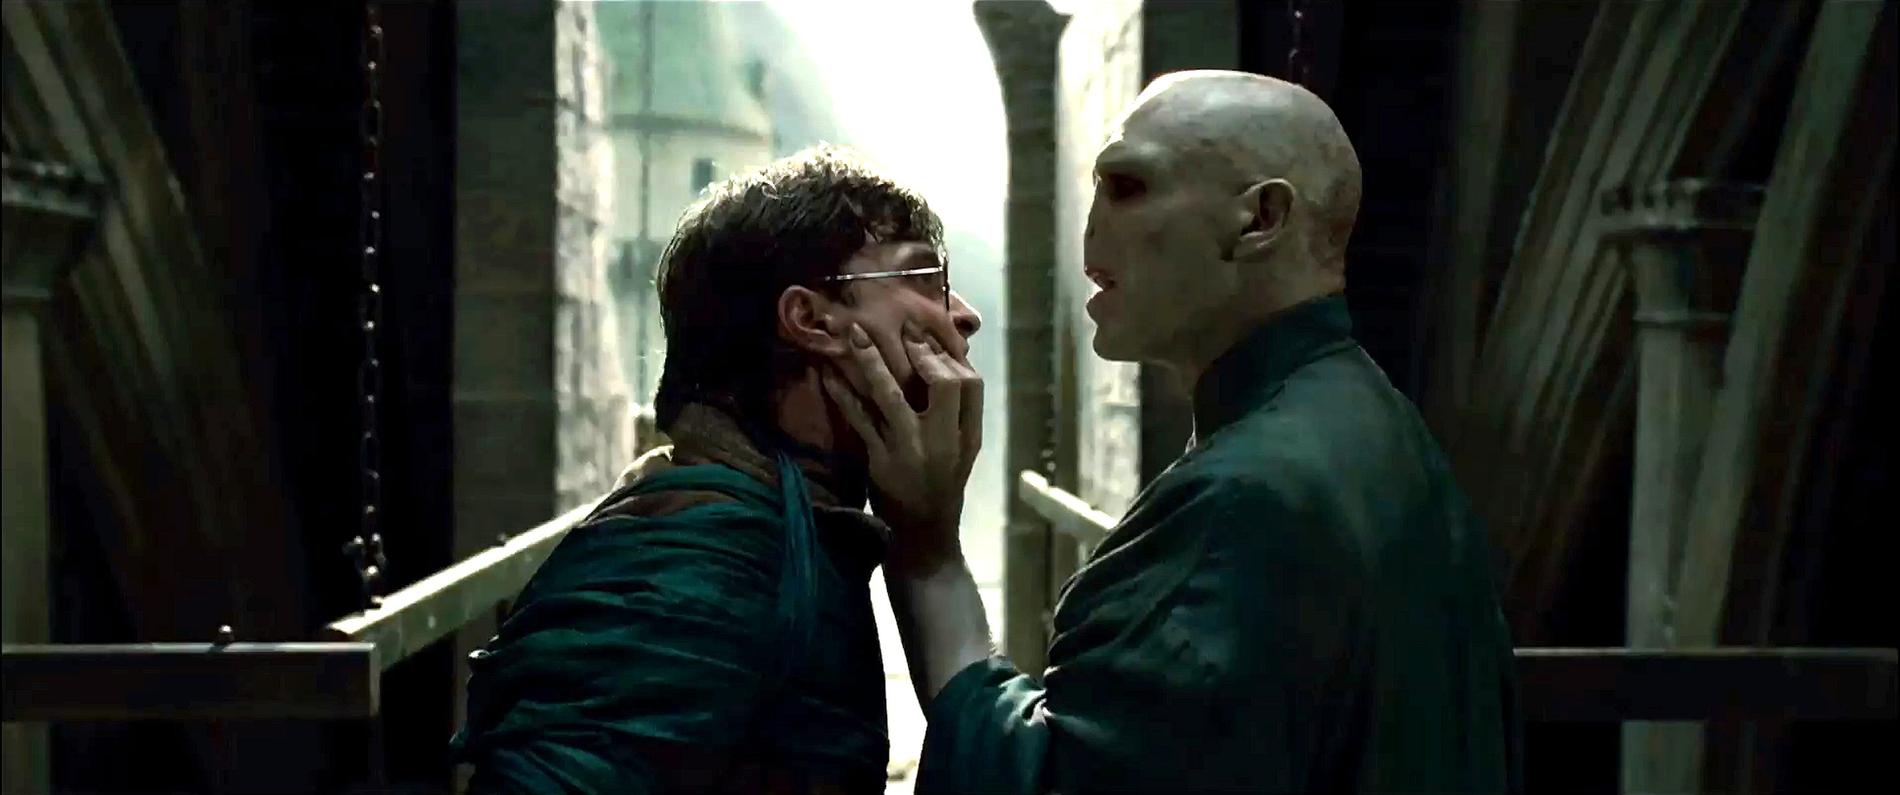 Ralph Fiennes, som spilte Voldemort, har også meldt ankomst til reunionen. 